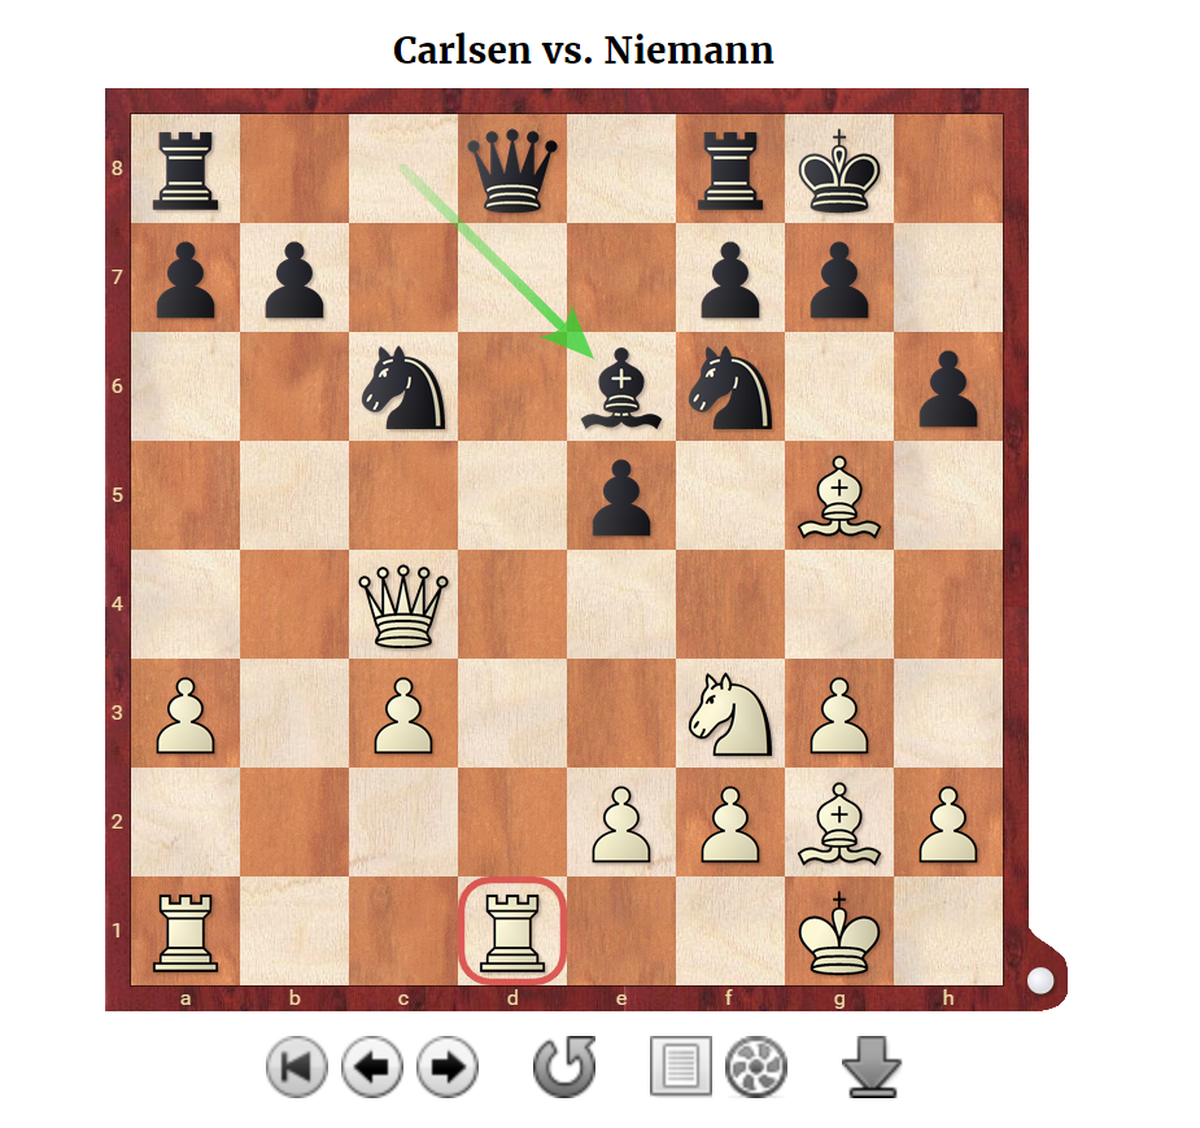 Chessdom - Chess, chess news, live chess games